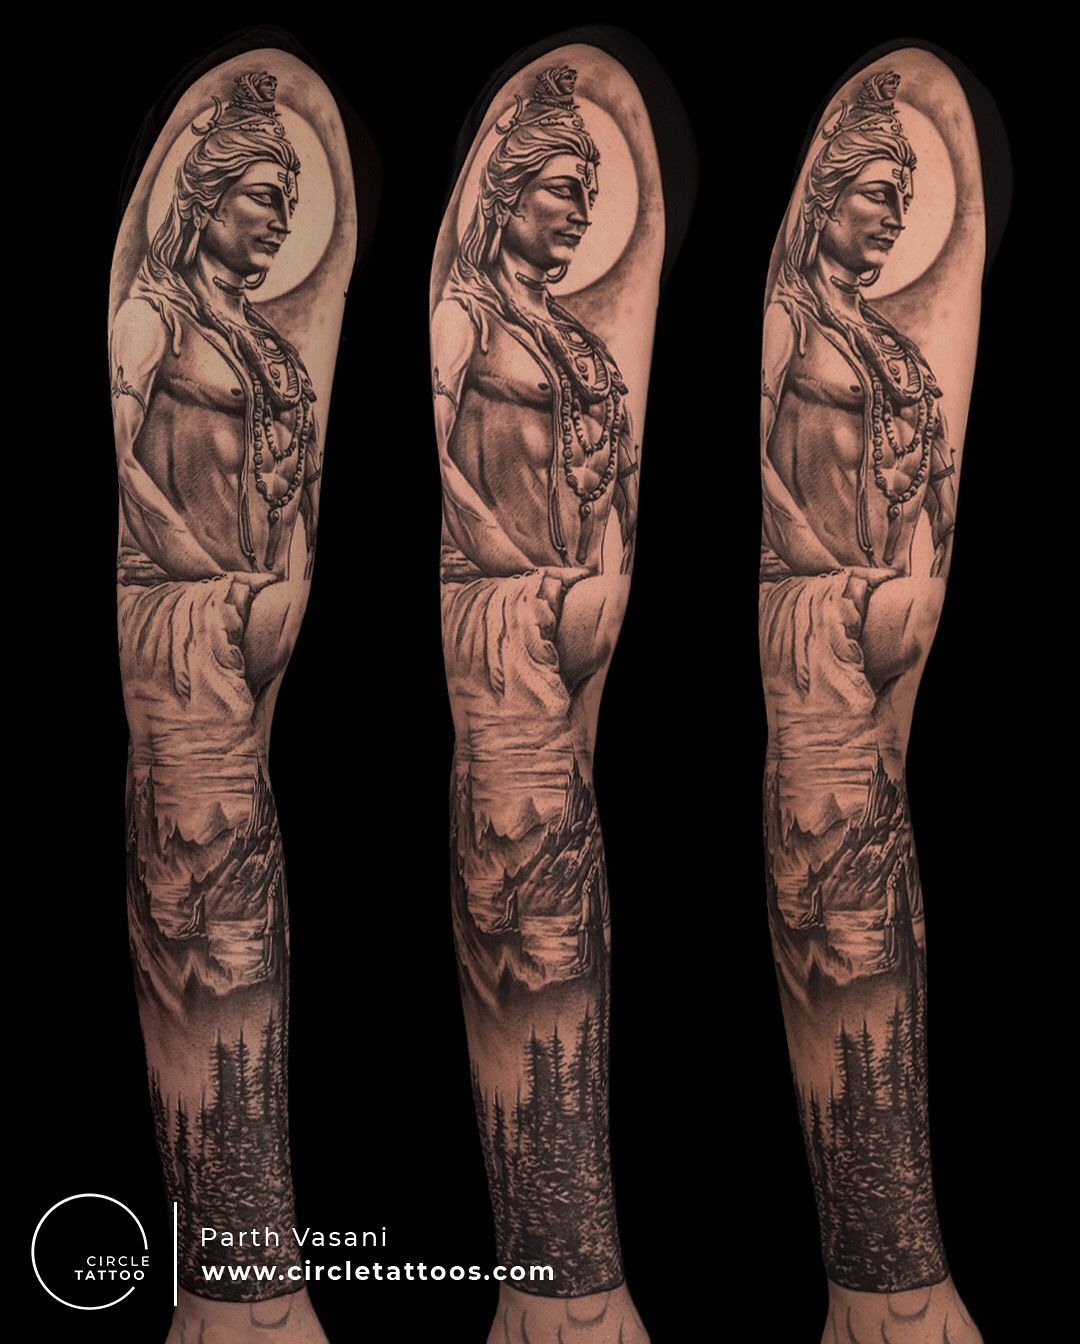 Lord Shiva Cover Up Tattoo on Arm - Ace Tattooz